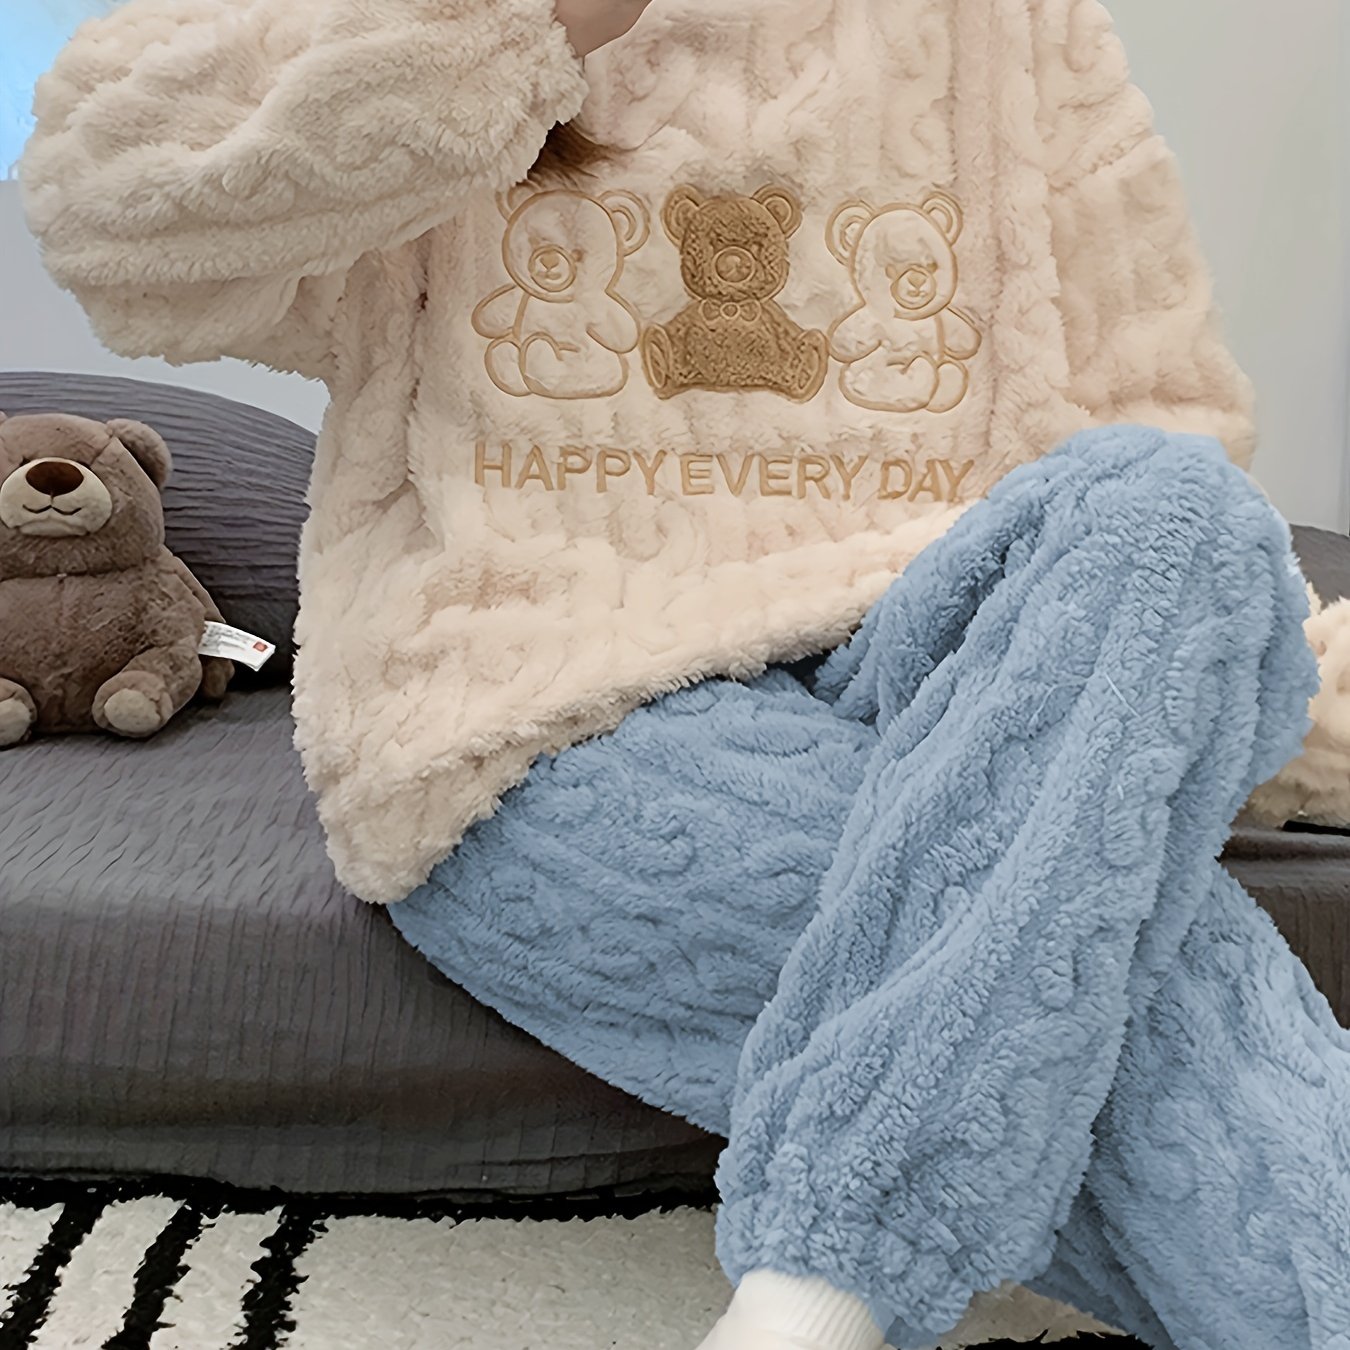 Cozy Cartoon Bear Print Womens Cotton Pajama Set For Autumn/Winter Hometime  Sleepwear 230310 From Kong00, $21.98